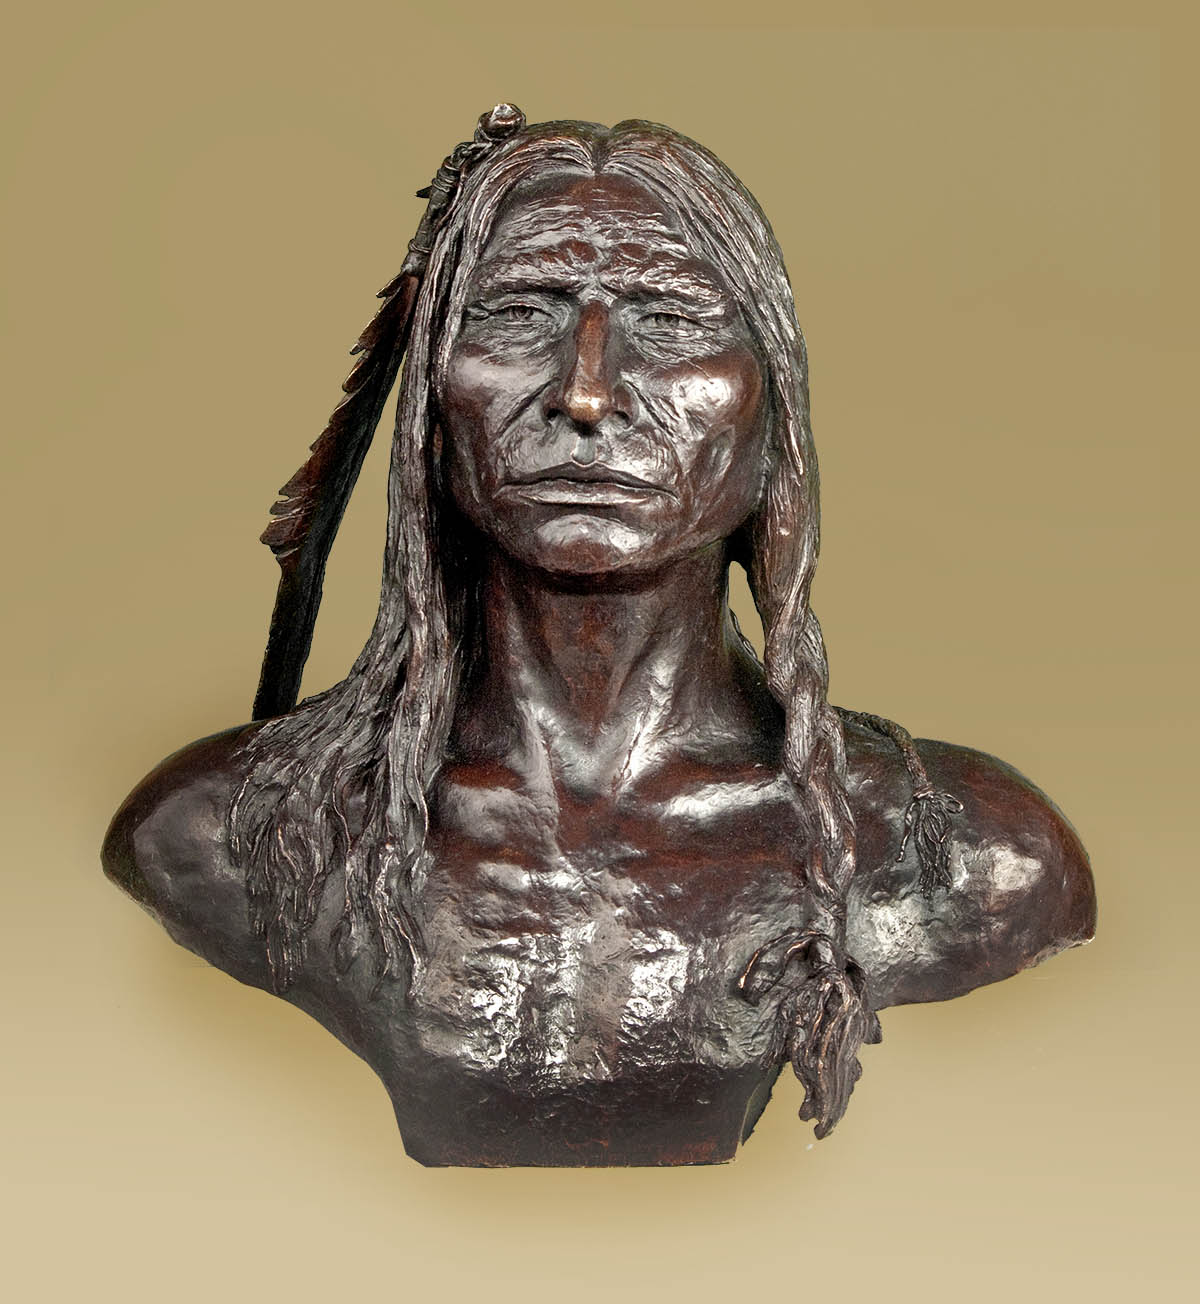  life size bronze bust of Crazy Horse, Oglala Lakota chief,      spiritual leader, by western artist Ernest Berke